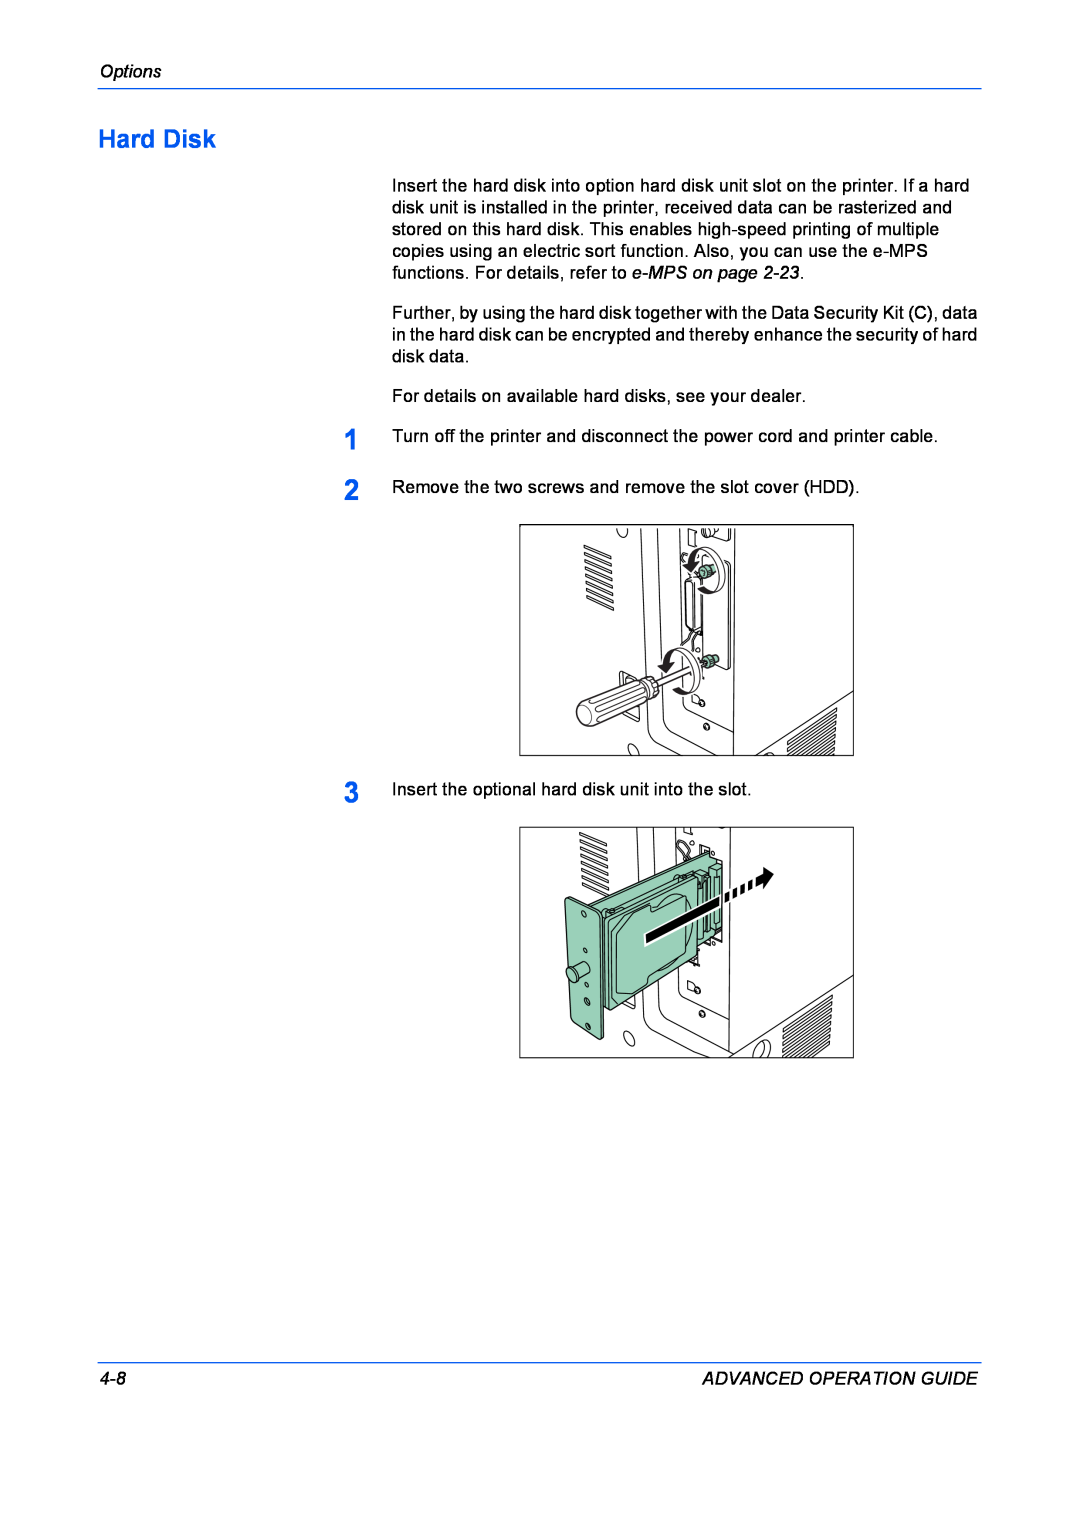 Kyocera 9530DN manual Hard Disk, Options, Advanced Operation Guide 